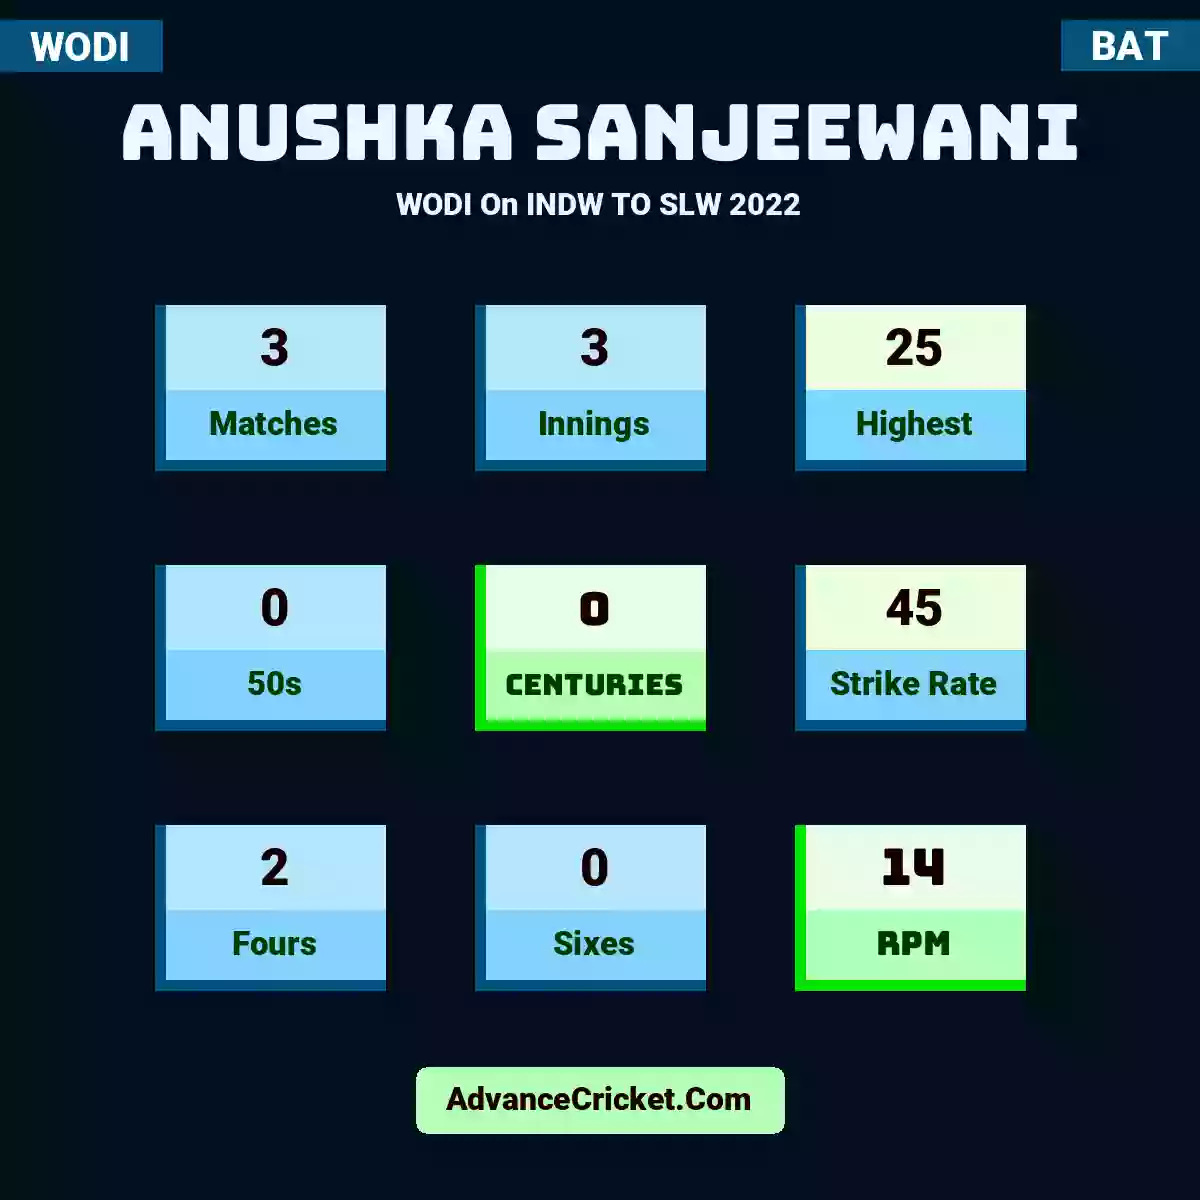 Anushka Sanjeewani WODI  On INDW TO SLW 2022, Anushka Sanjeewani played 3 matches, scored 25 runs as highest, 0 half-centuries, and 0 centuries, with a strike rate of 45. A.Sanjeewani hit 2 fours and 0 sixes, with an RPM of 14.